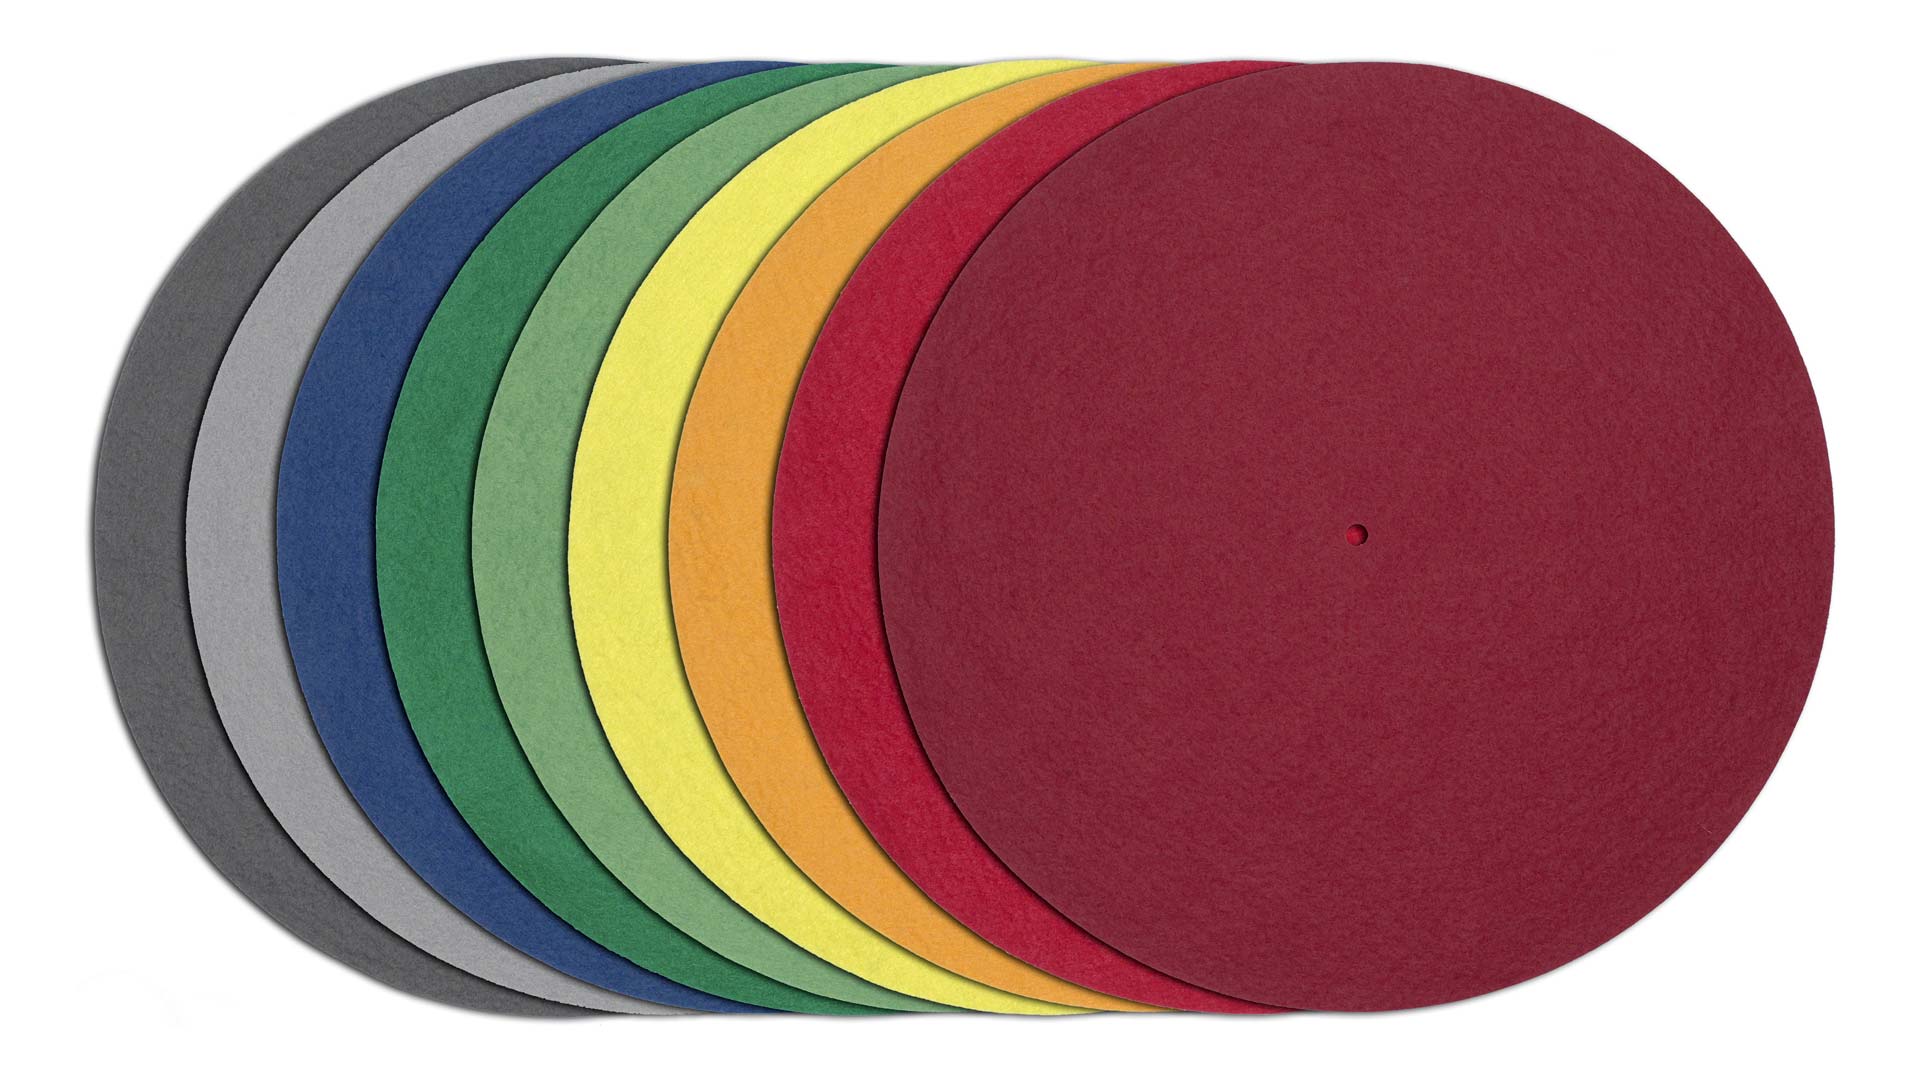 zkm Turntable Mat Slipmat Audiophile 3mm Felt Platter Vinyl Record Players Anti-Vibration Durable Anti-Static Red